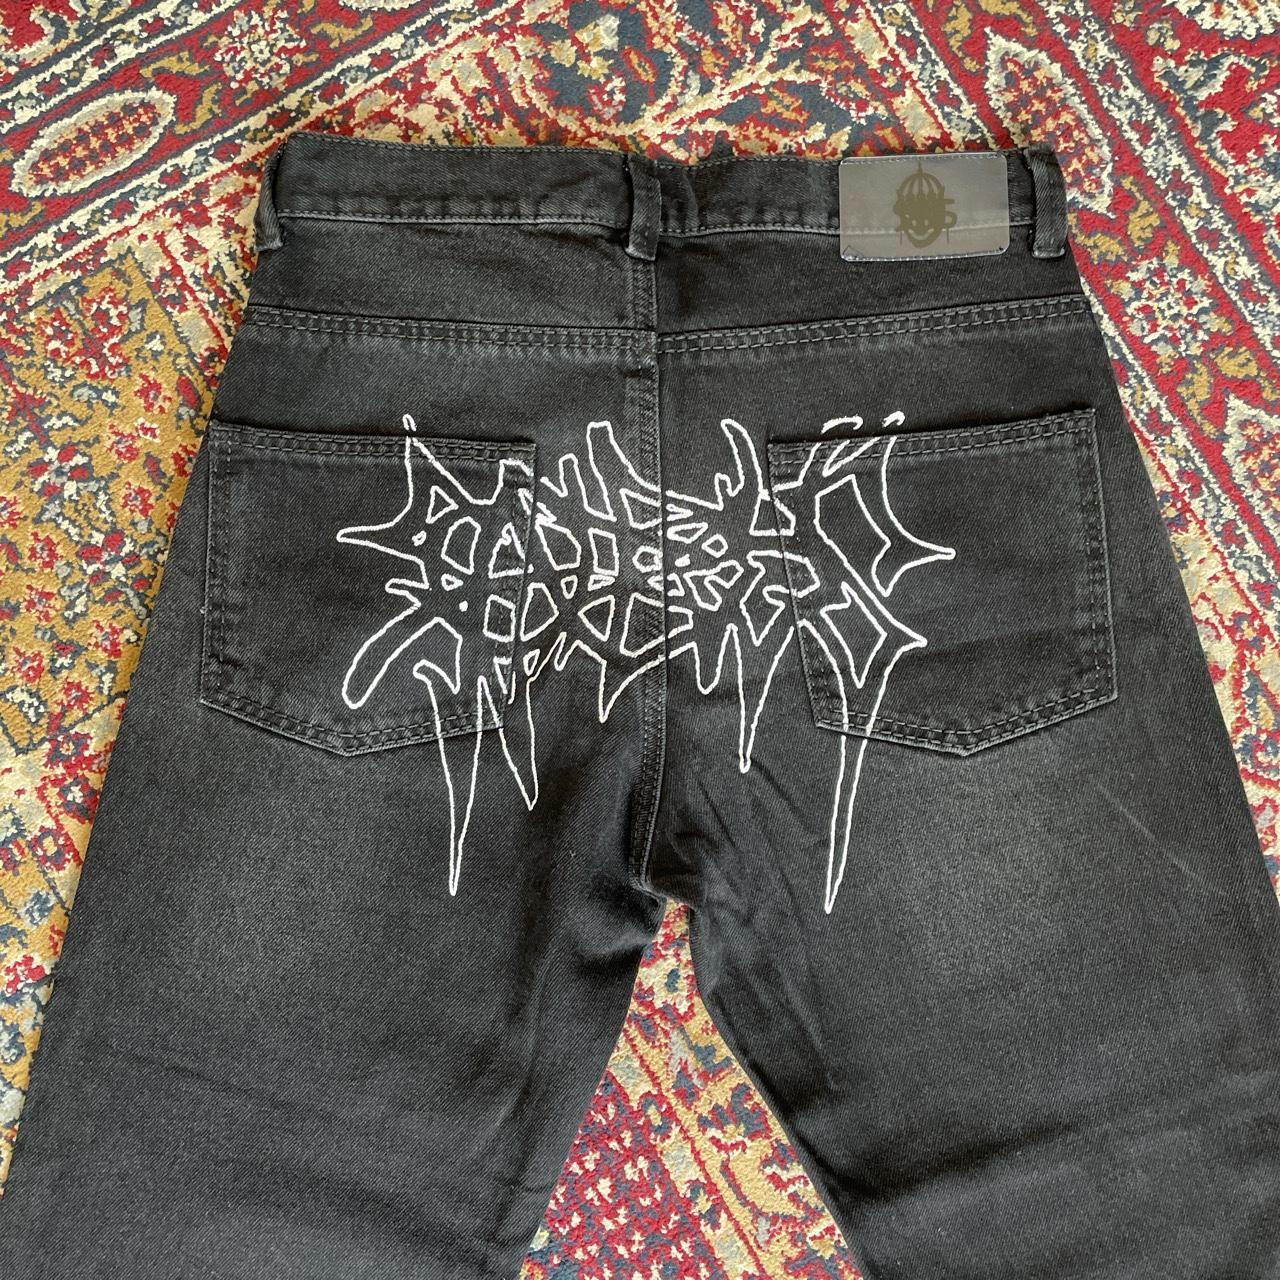 Sadboys gear 'useless' black denim jeans / Size... - Depop